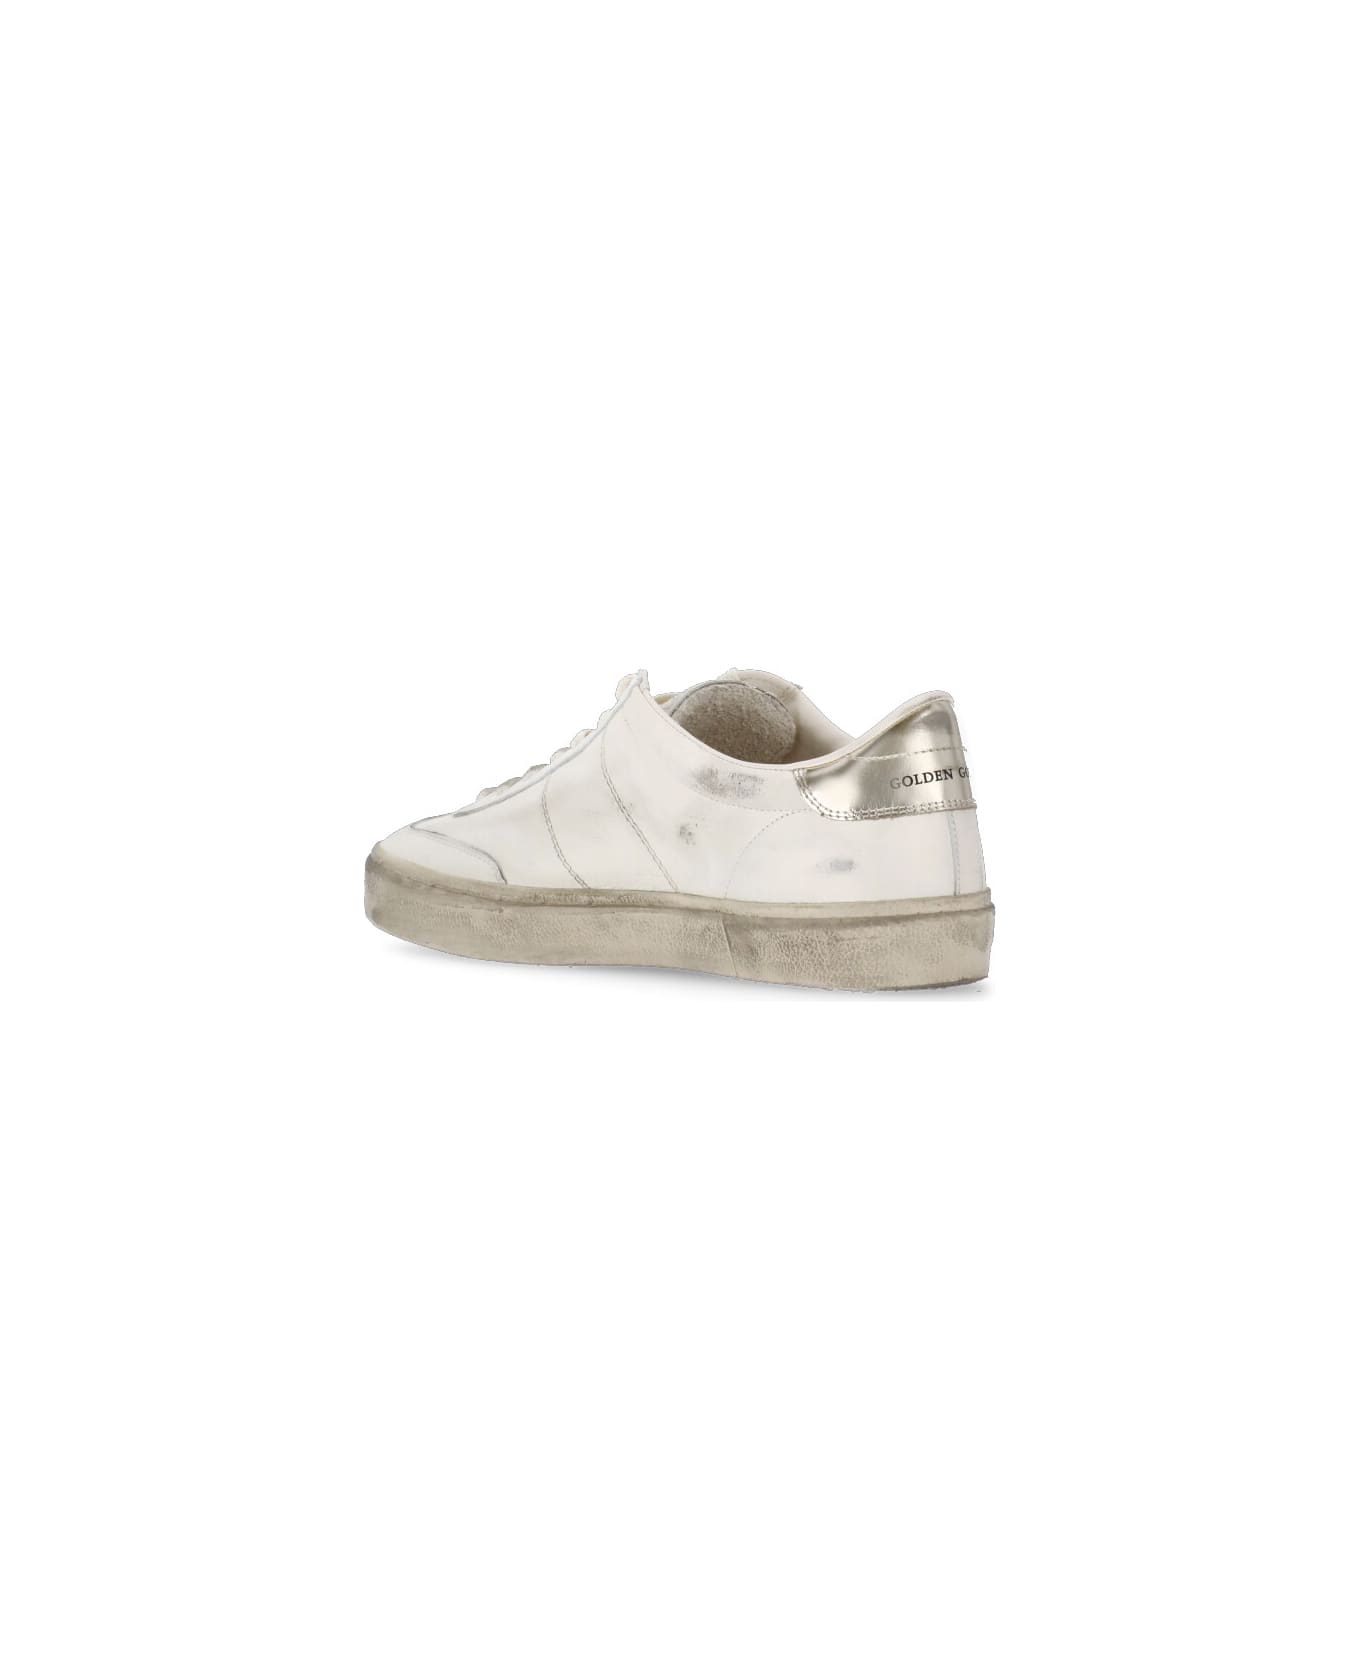 Golden Goose Soul Star Sneakers - White